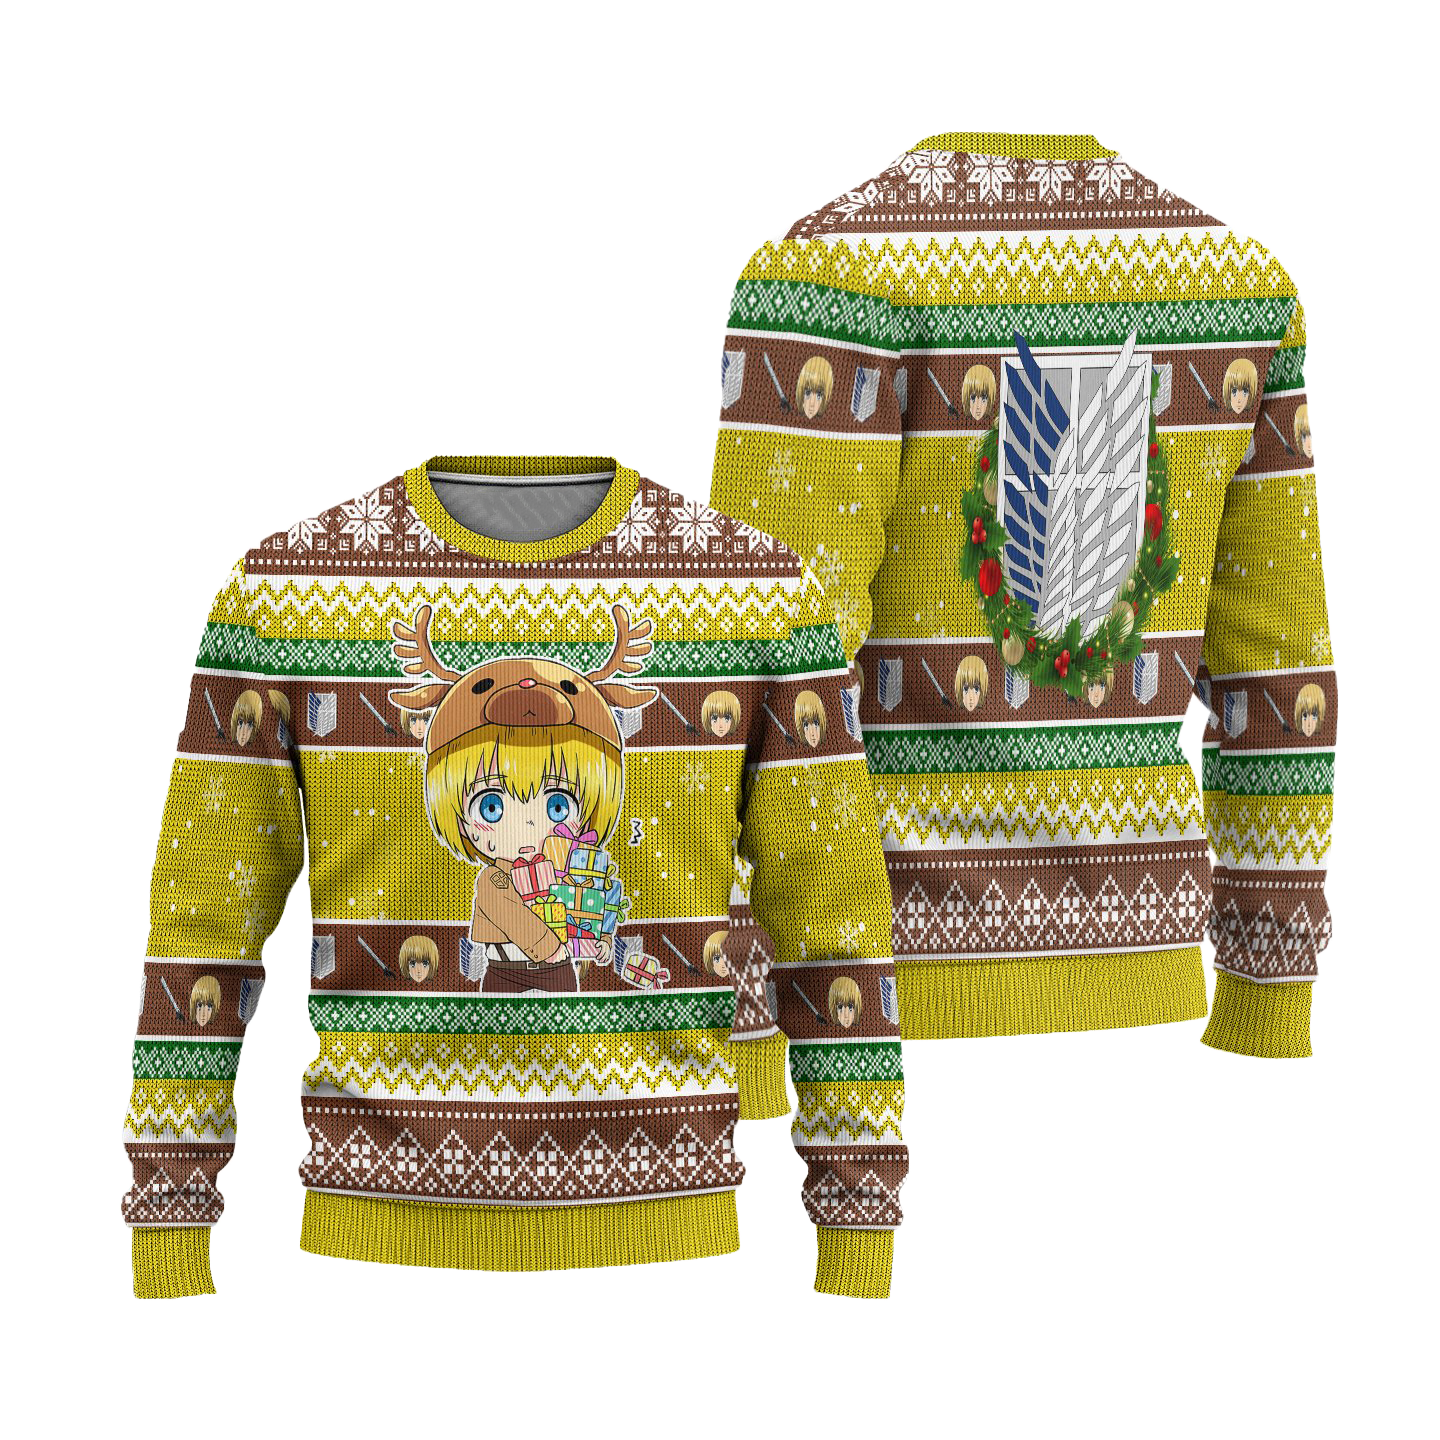 Armin Arlert Attack on Titan Anime Ugly Christmas Sweater Xmas Gift